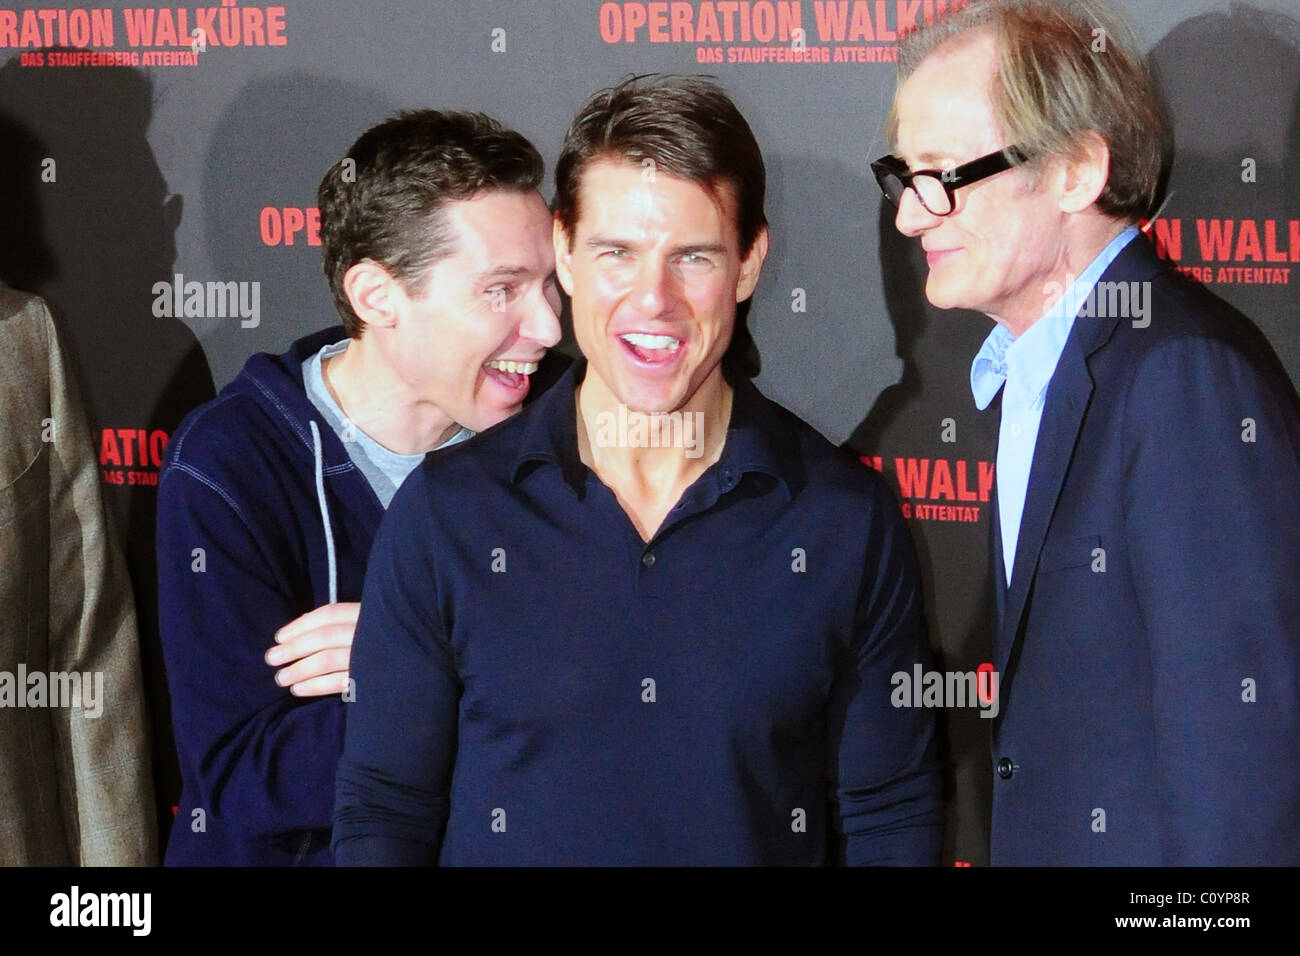 Bryan Singer, Tom Cruise, Bill Nighy 'Operation Walkre: Das Stauffenberg Attentat' ('Valkyrie') photocall at Hotel de Rome Stock Photo